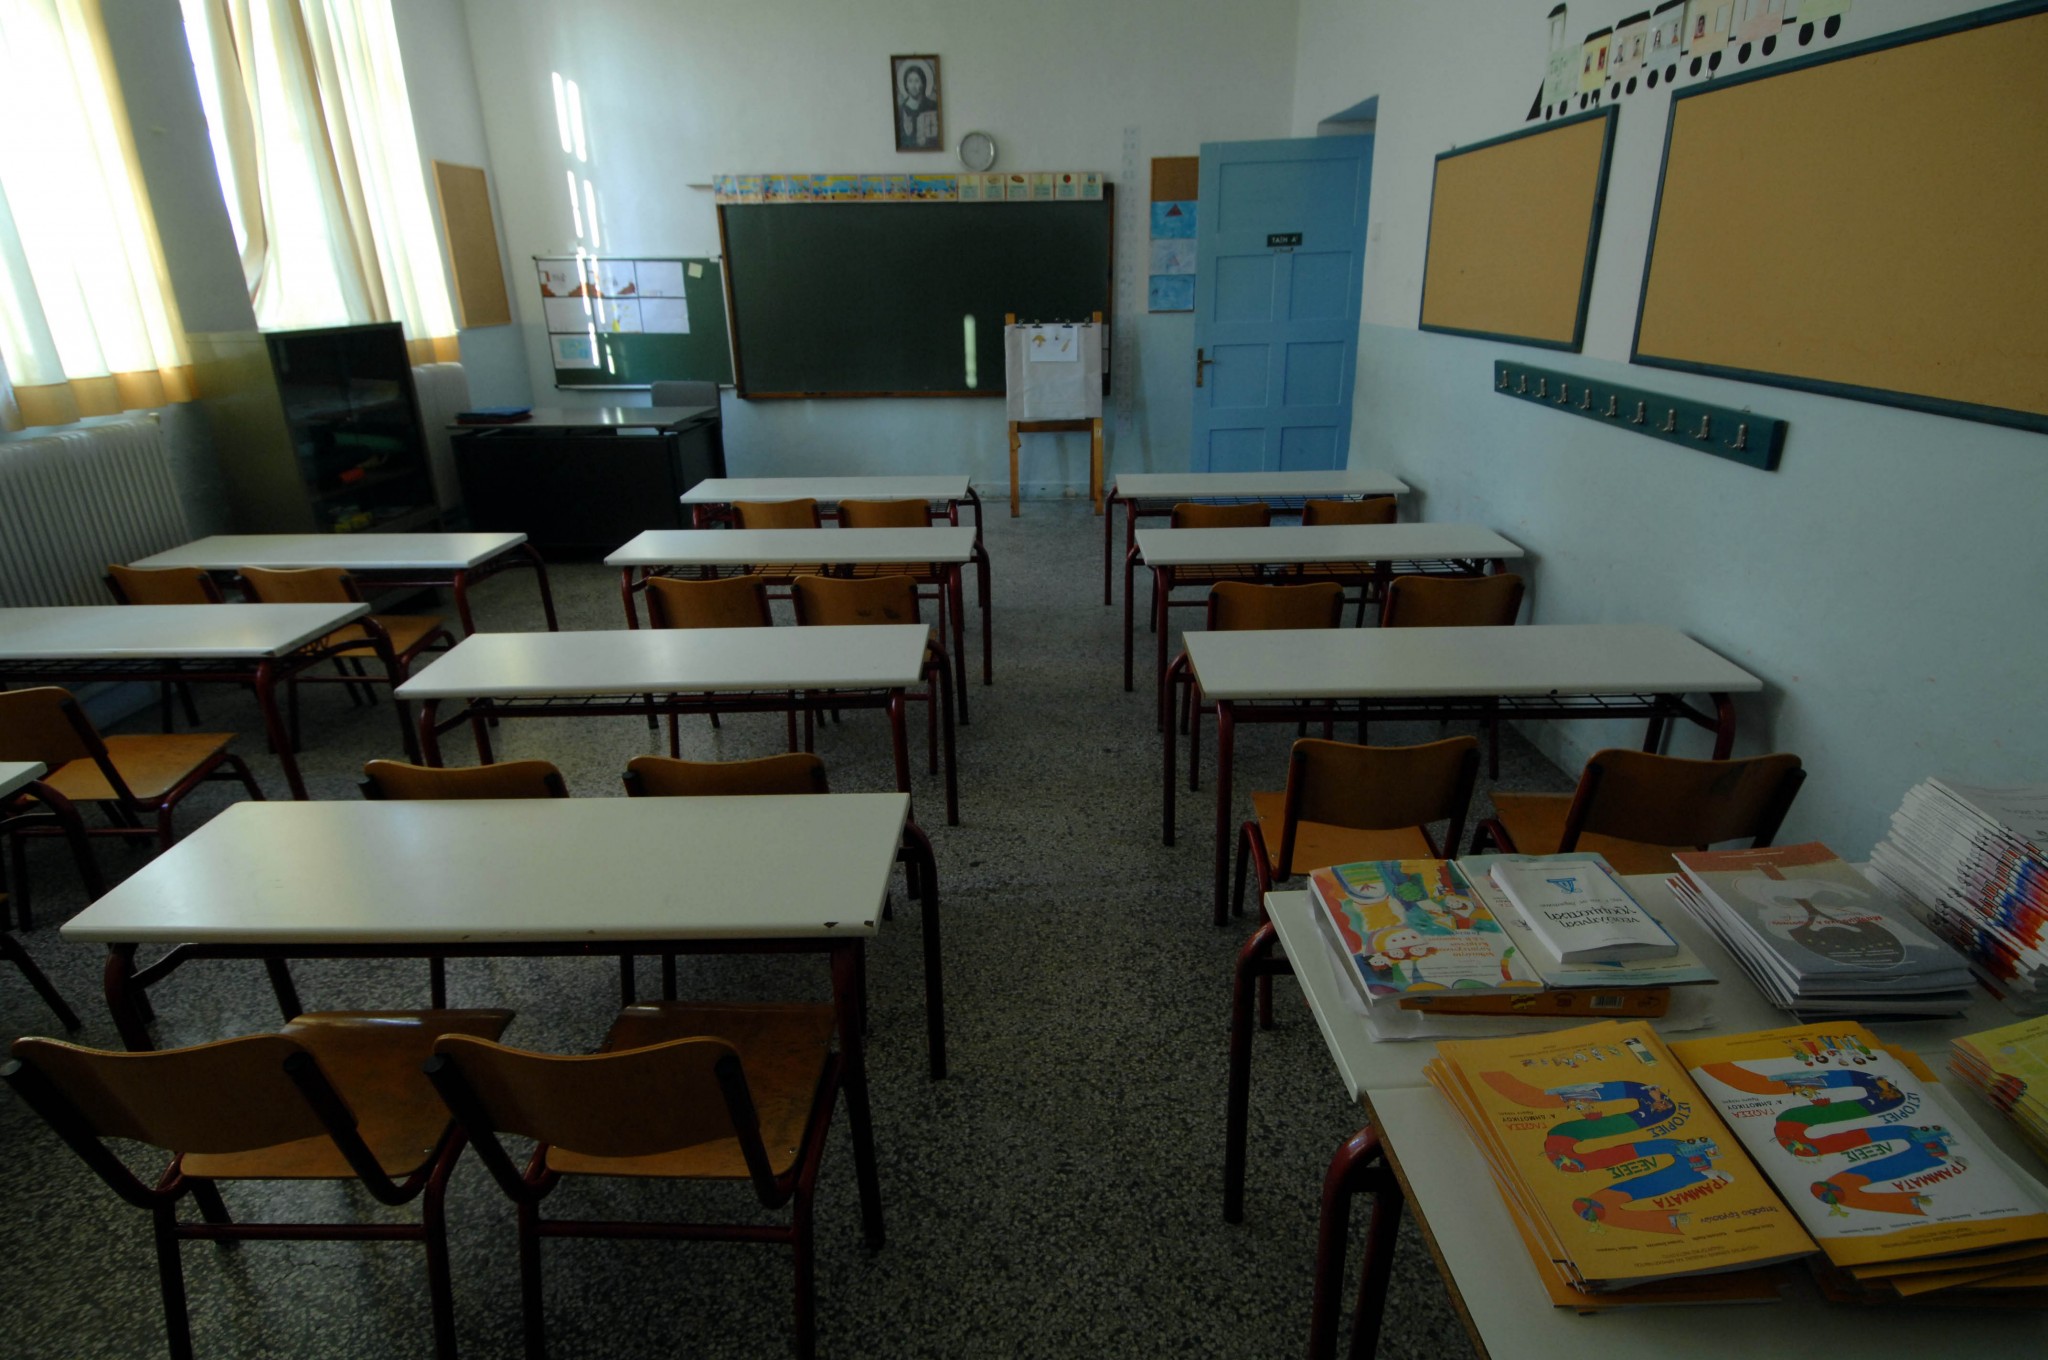 SOS εκπέμπουν οι εκπαιδευτικοί της Μαγνησίας- Ζητούν επίδομα και ψυχολογική στήριξη για τα παιδιά